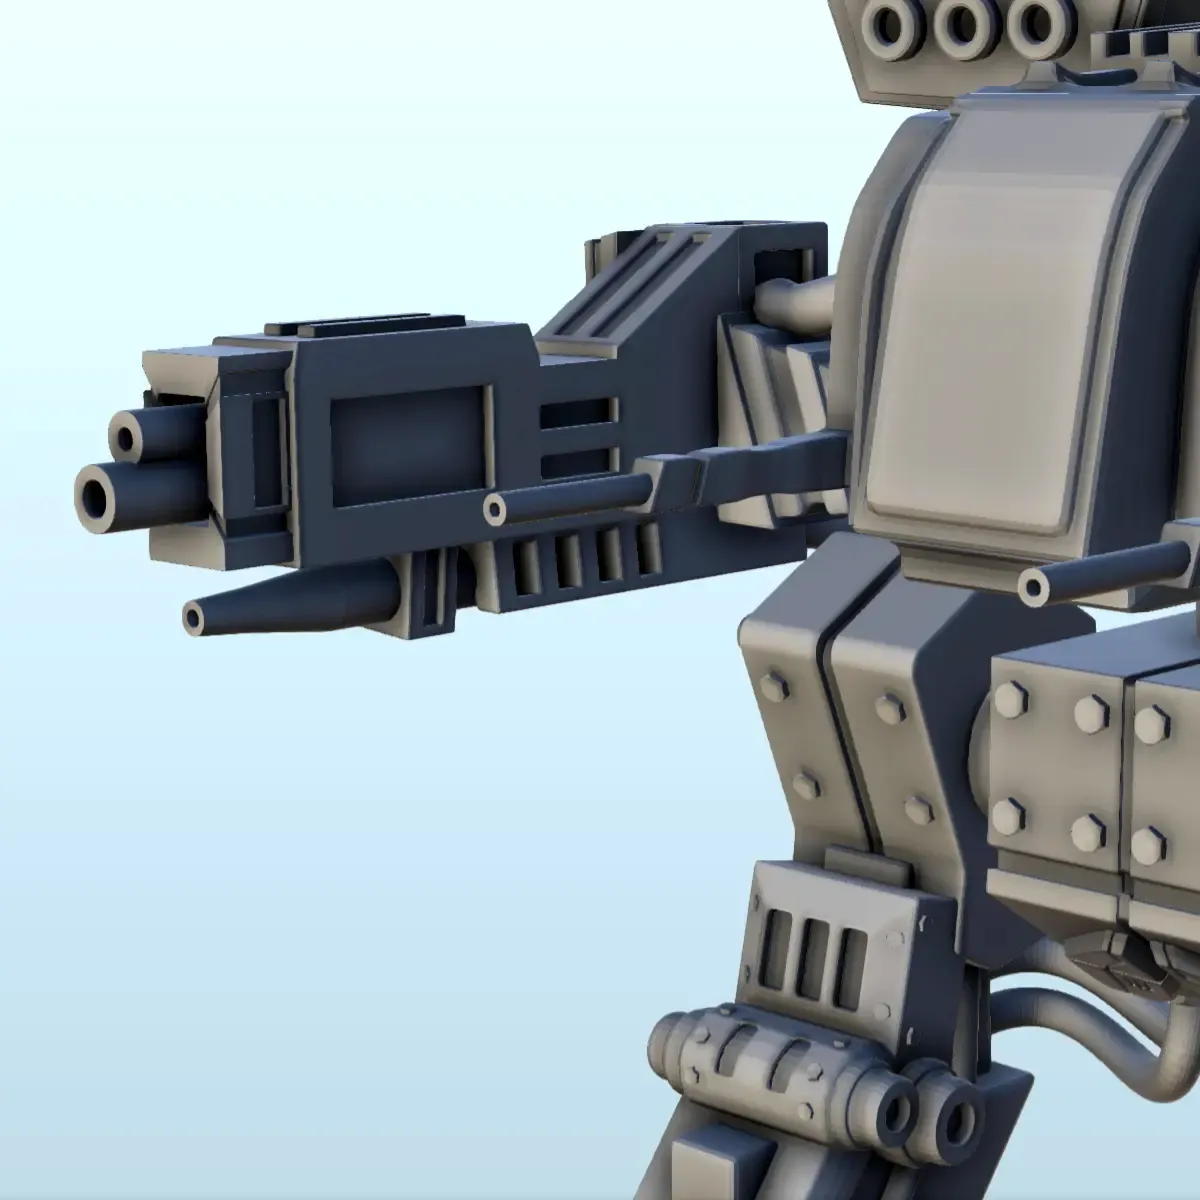 Uzsus combat robot (9) - sci-fi science fiction future 40k b